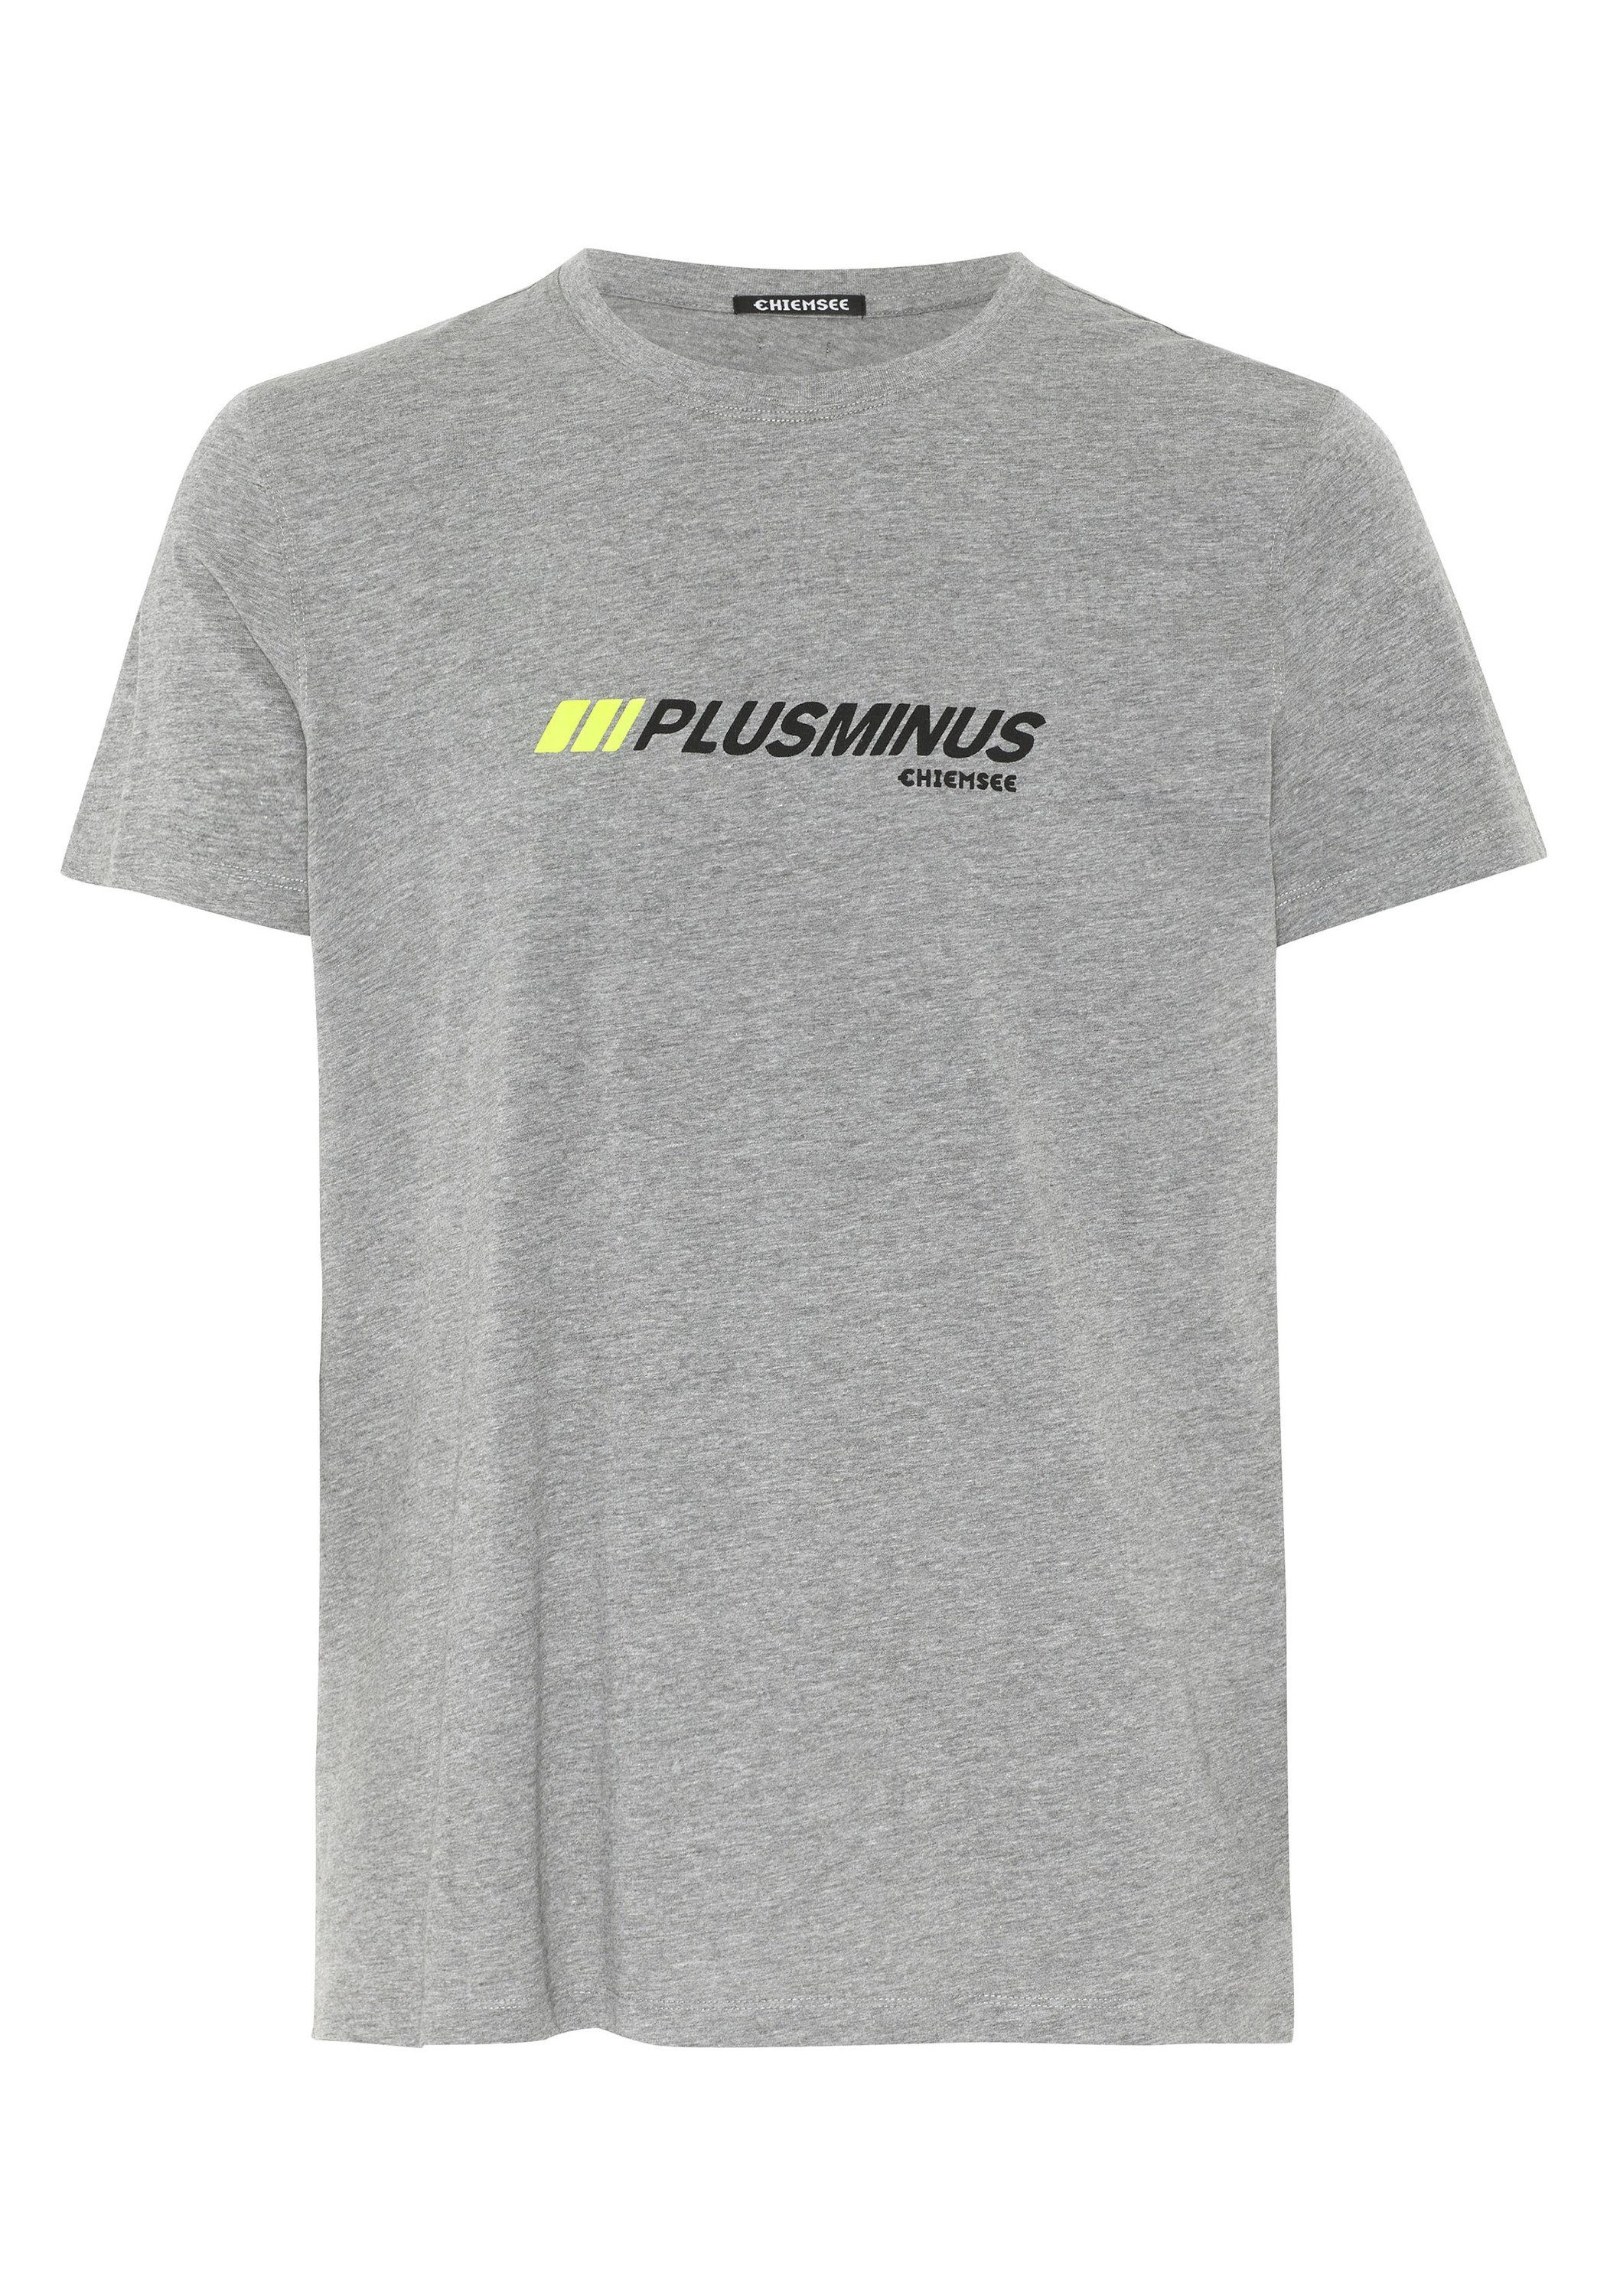 T-Shirt 1 mit Melange PLUS-MINUS-Print Medium Chiemsee Print-Shirt